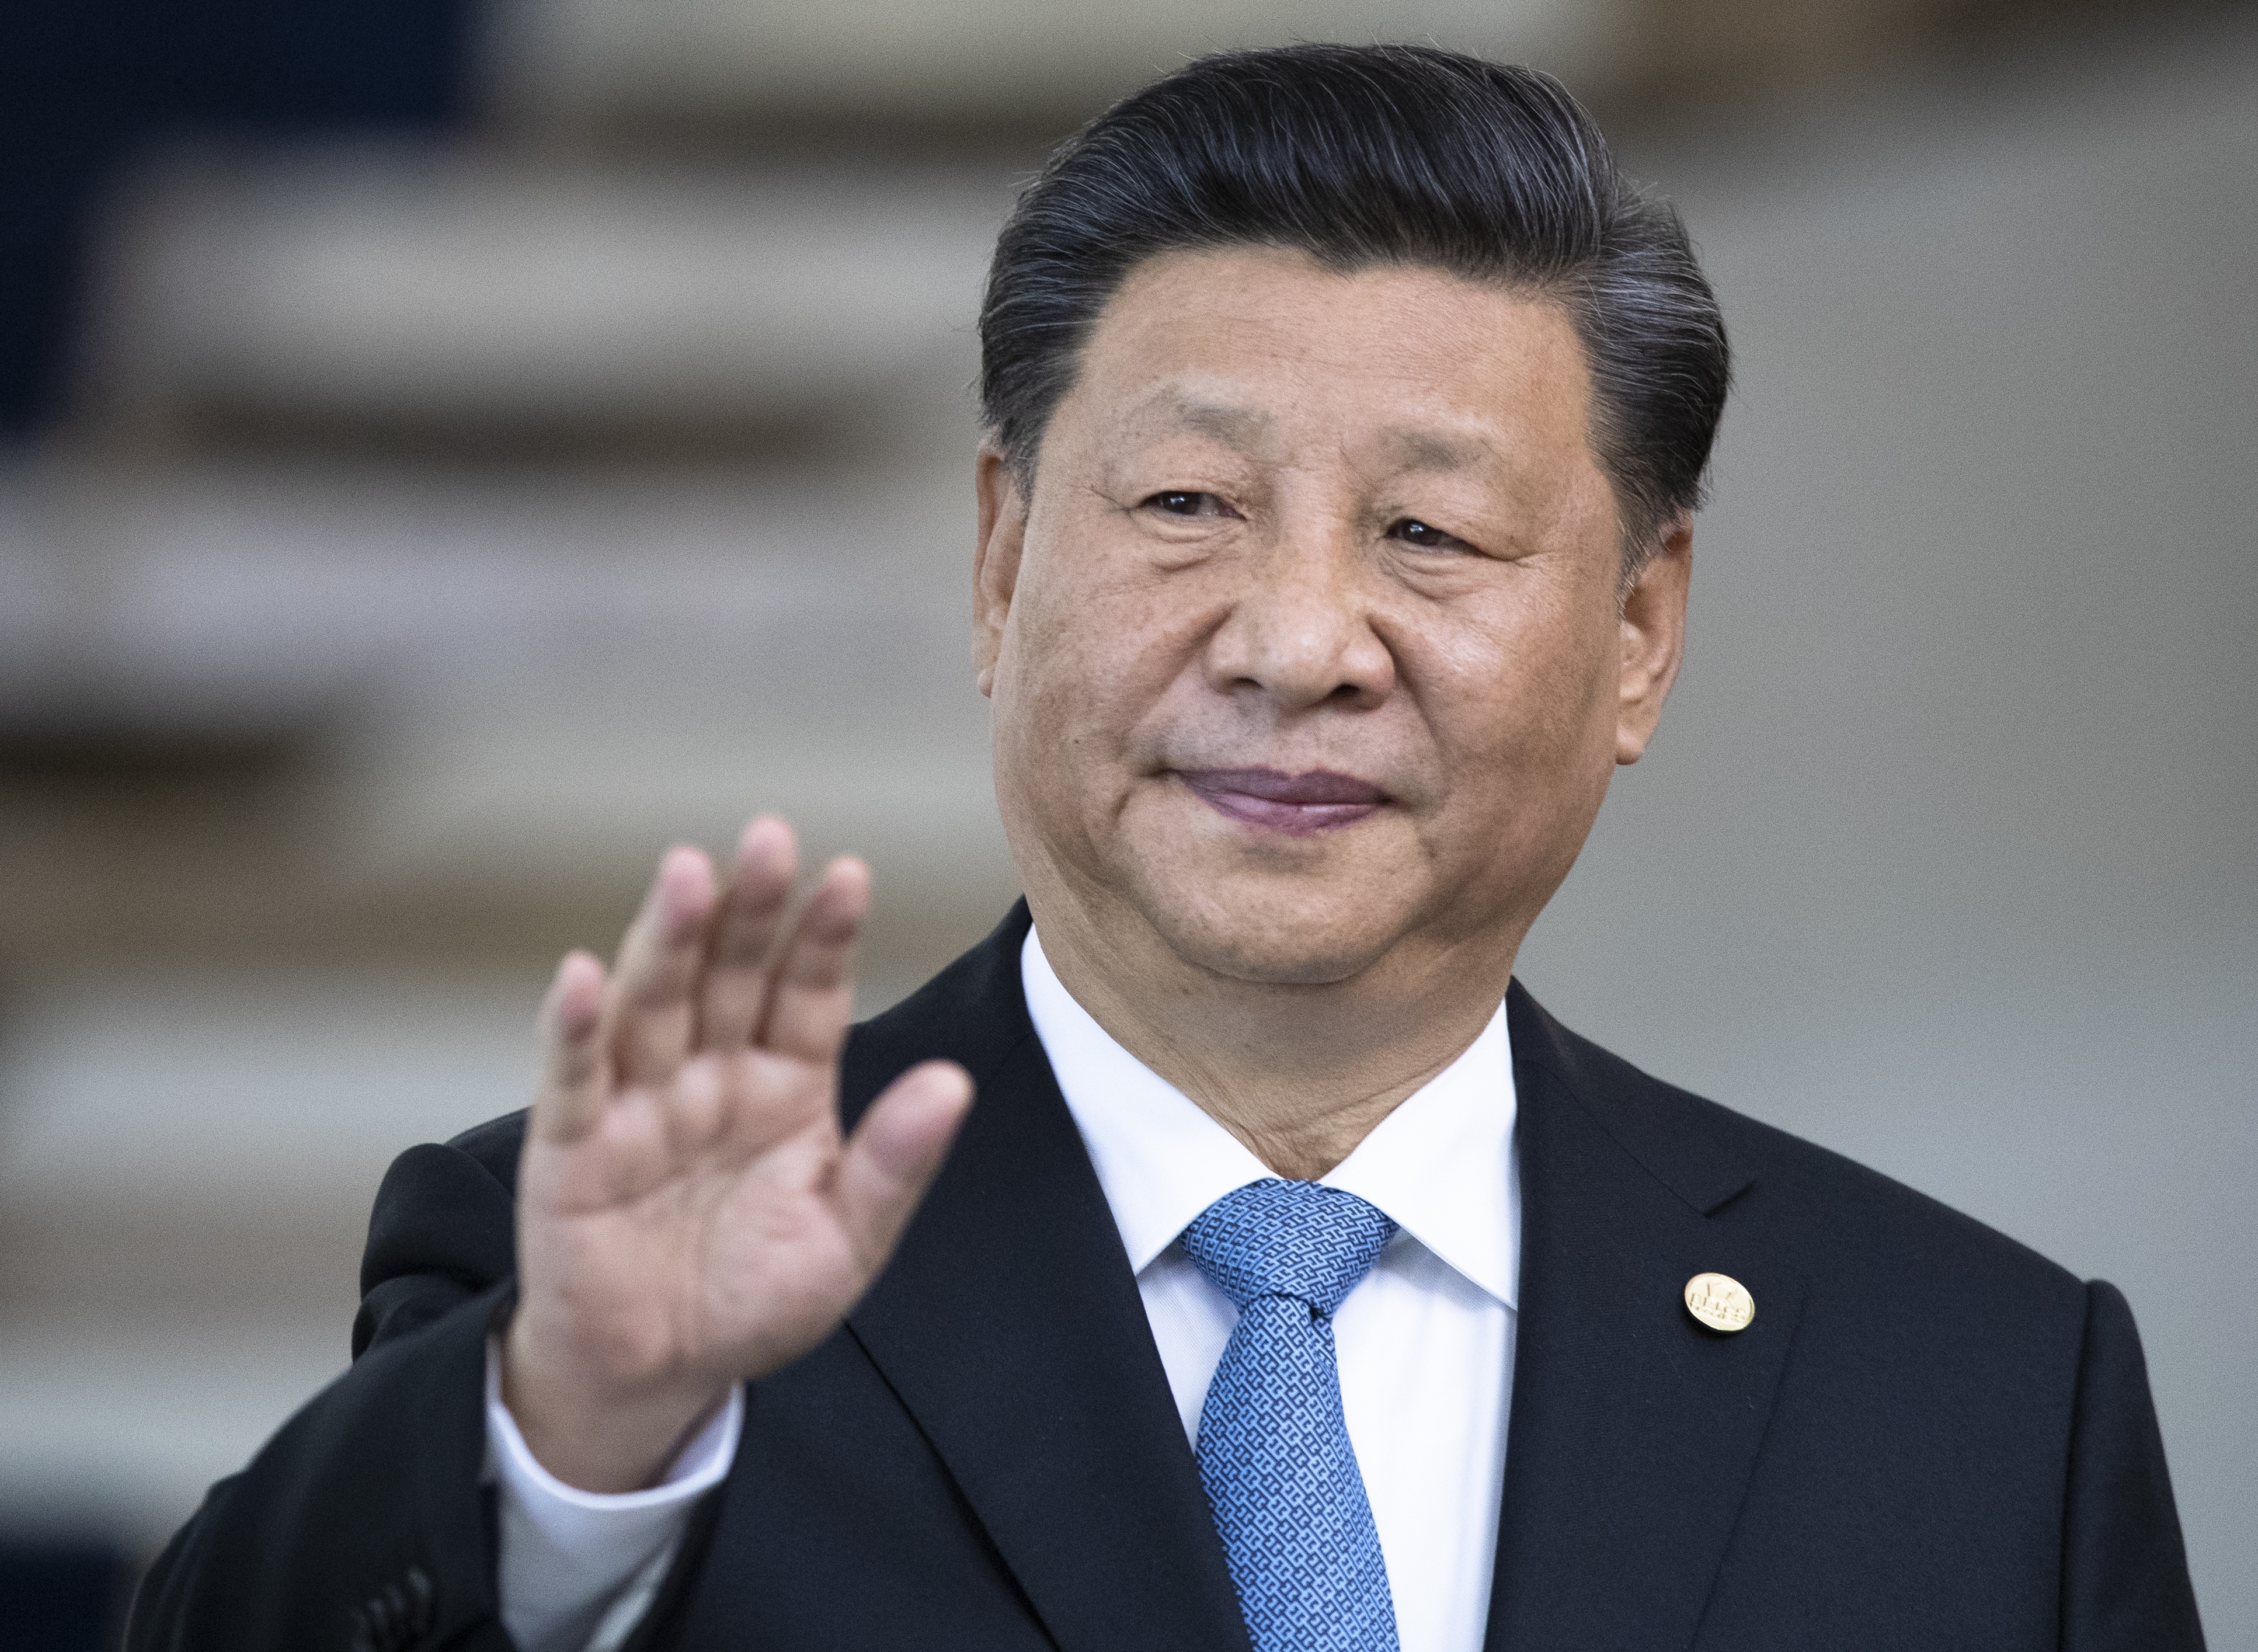 Xi Jinping dubbed China 'general secretary' shows Trump administration pressure increase - Washington Times